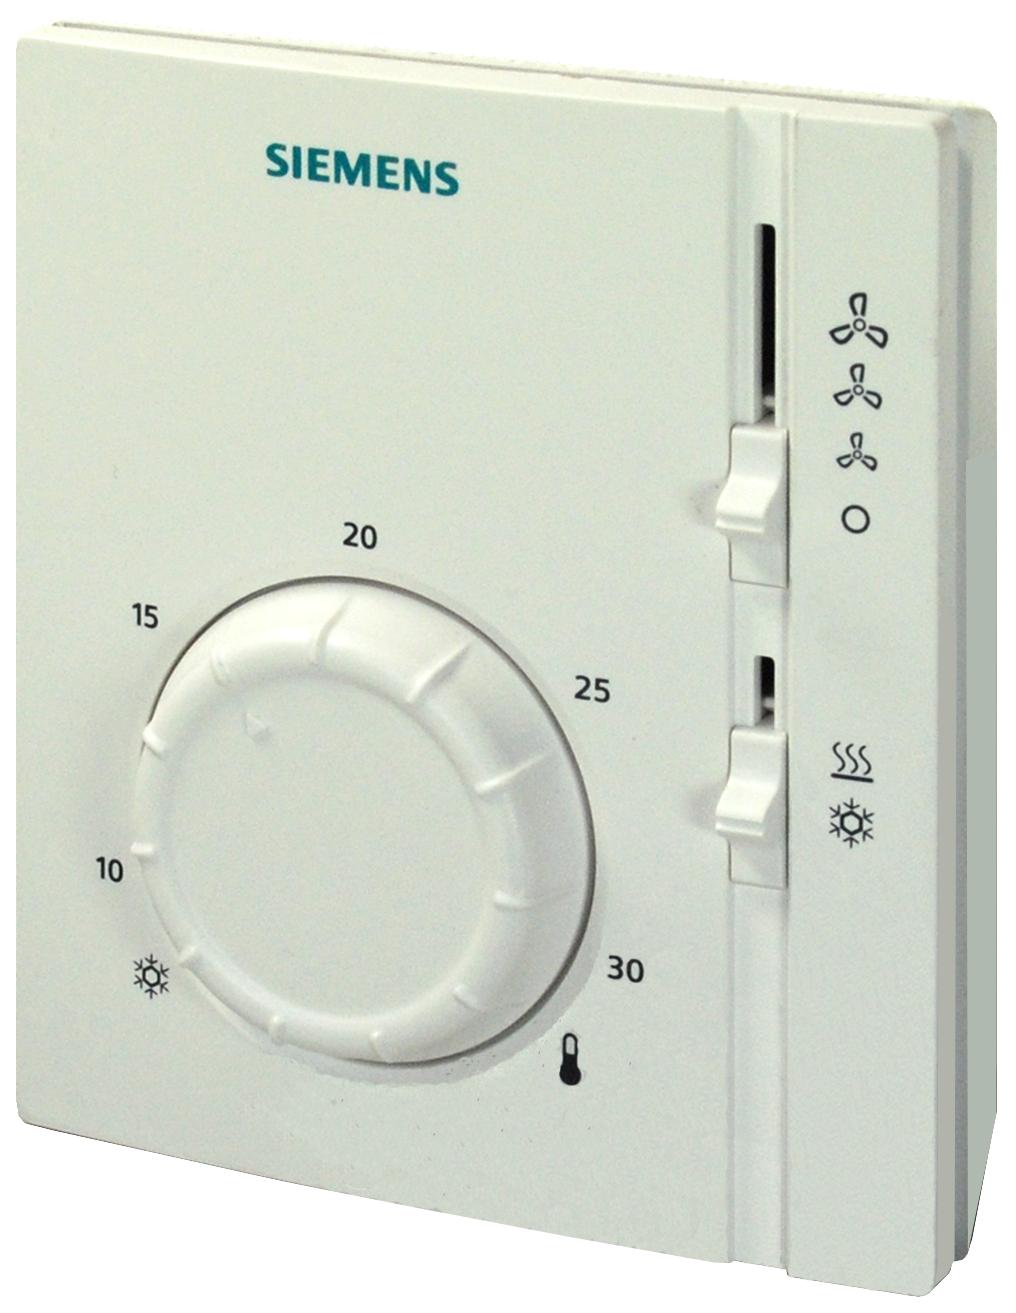 Fancoil thermostat RAB31 Siemens